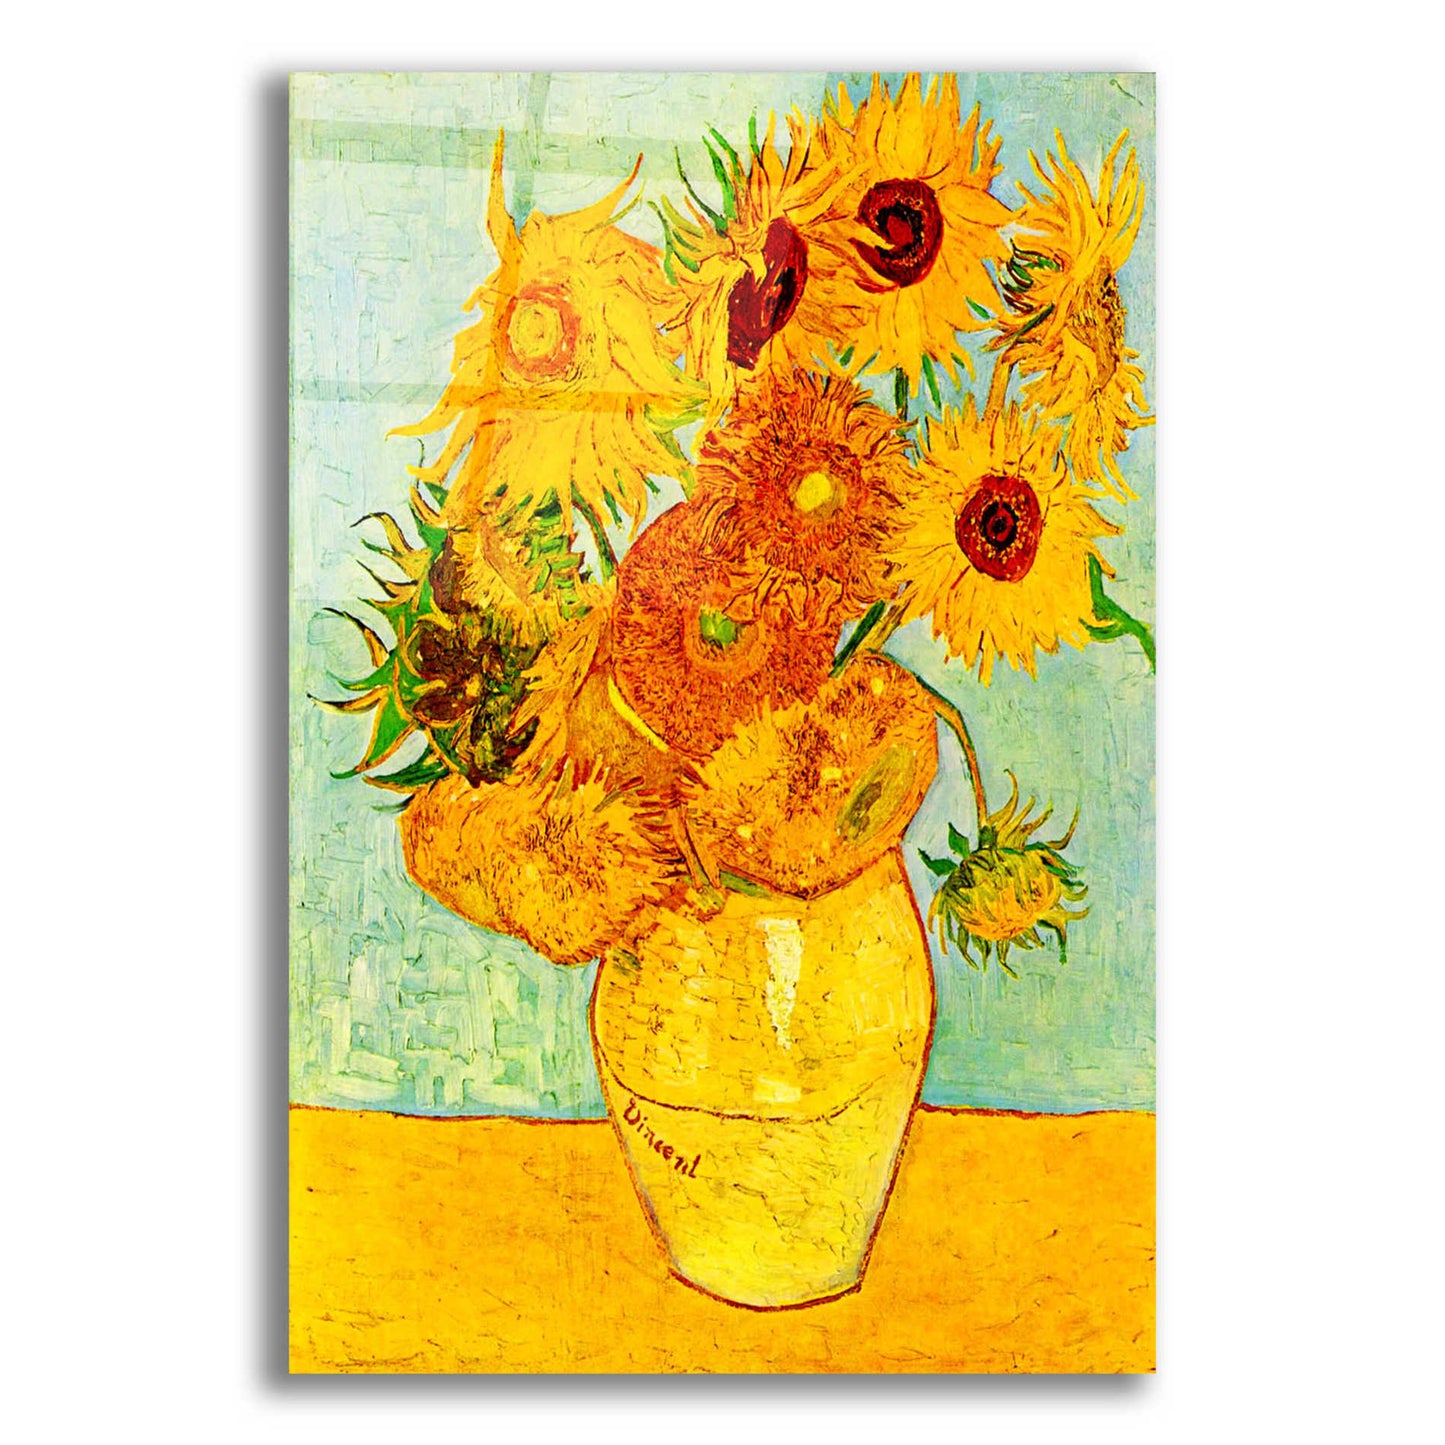 Epic Art 'Still Life: Vase with Twelve Sunflowers' by Vincent van Gogh, Acrylic Glass Wall Art,12x16x1.1x0,20x24x1.1x0,26x30x1.74x0,40x54x1.74x0